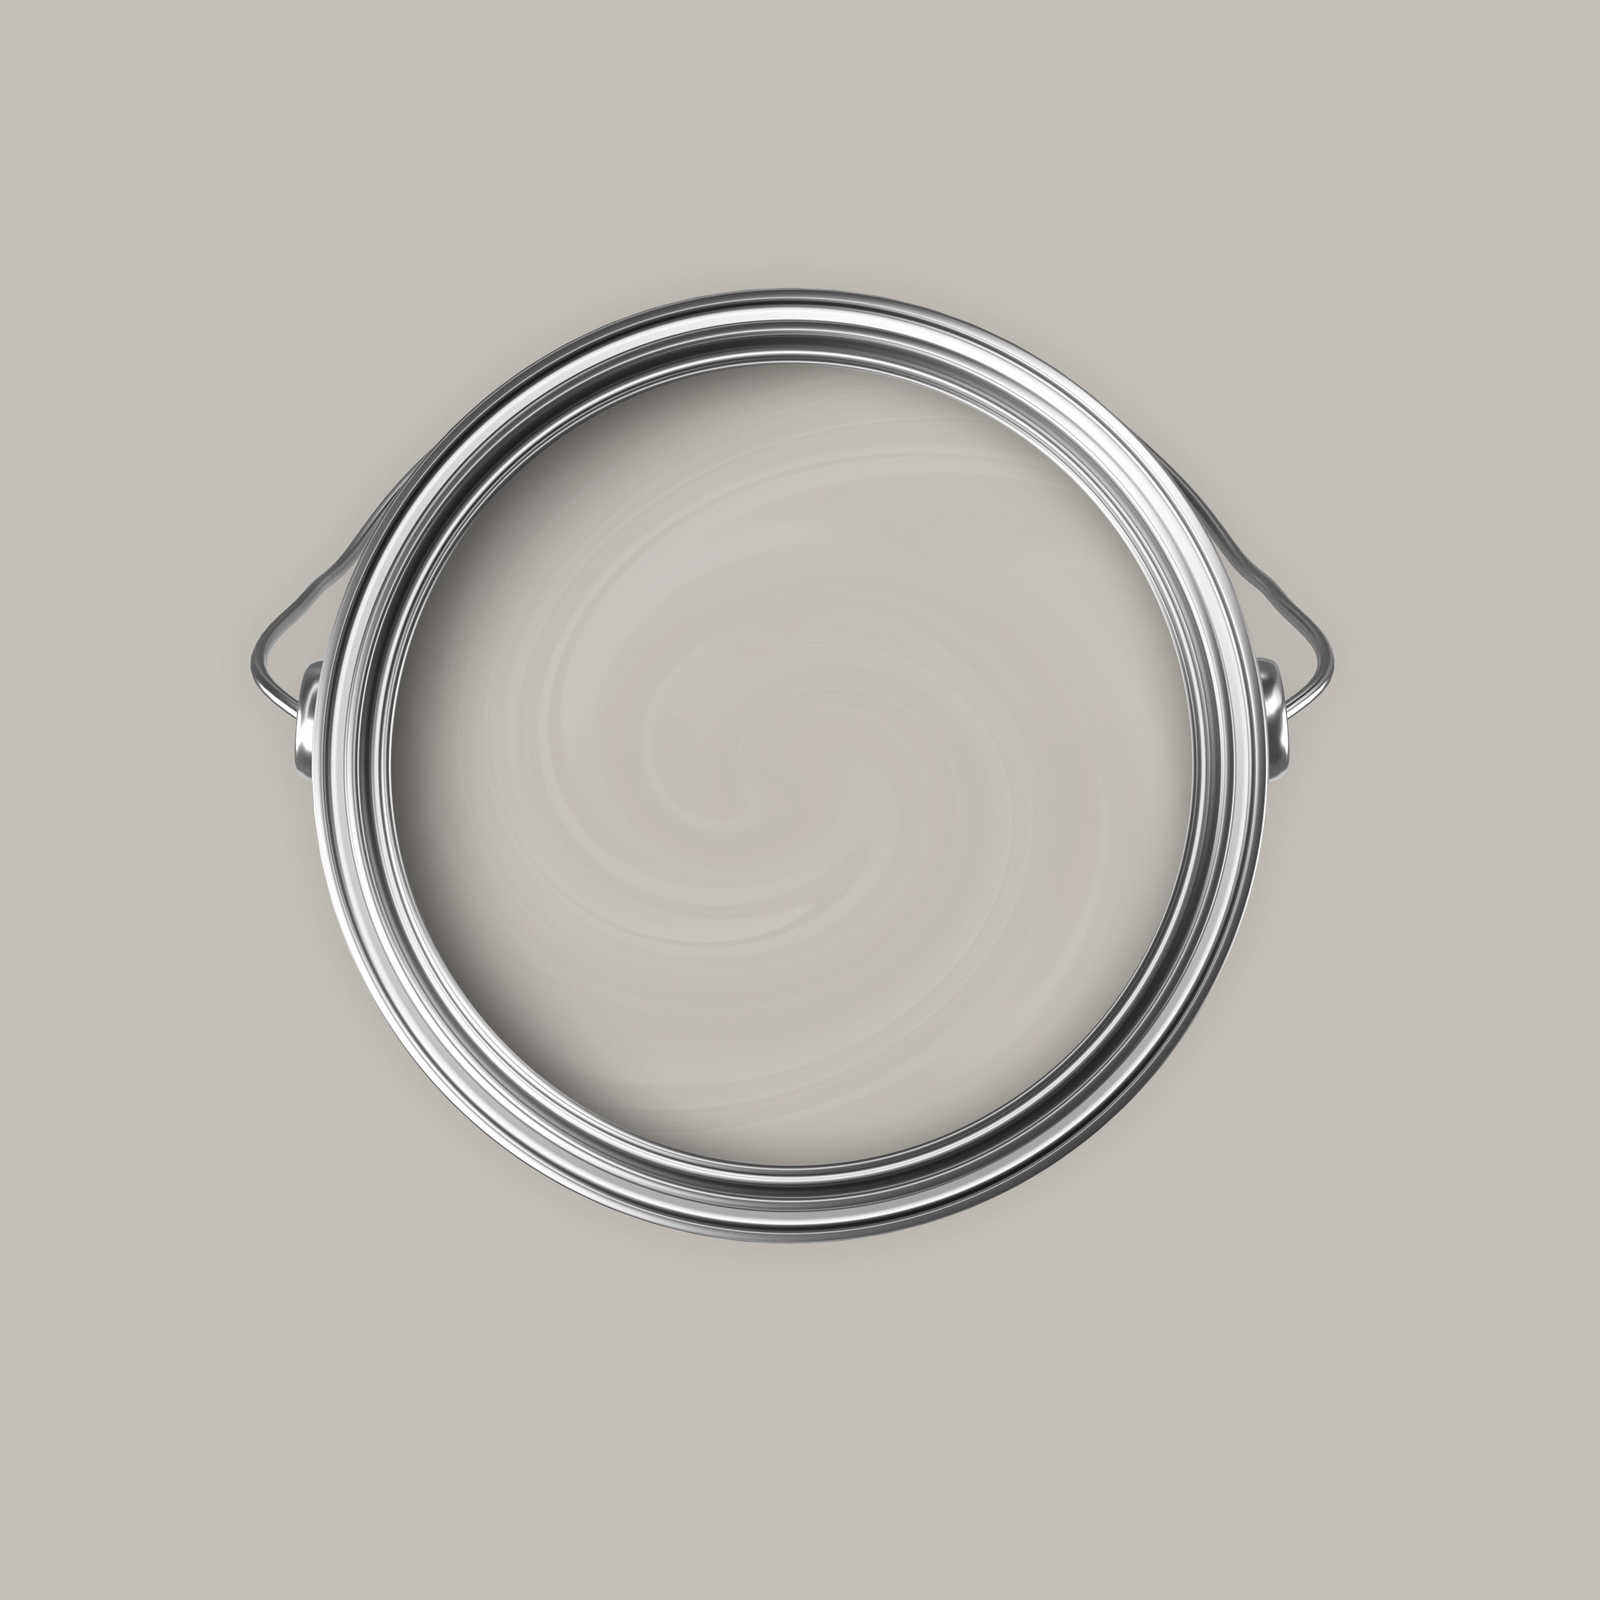             Premium Wandfarbe sanftes Seidengrau »Creamy Grey« NW111 – 5 Liter
        